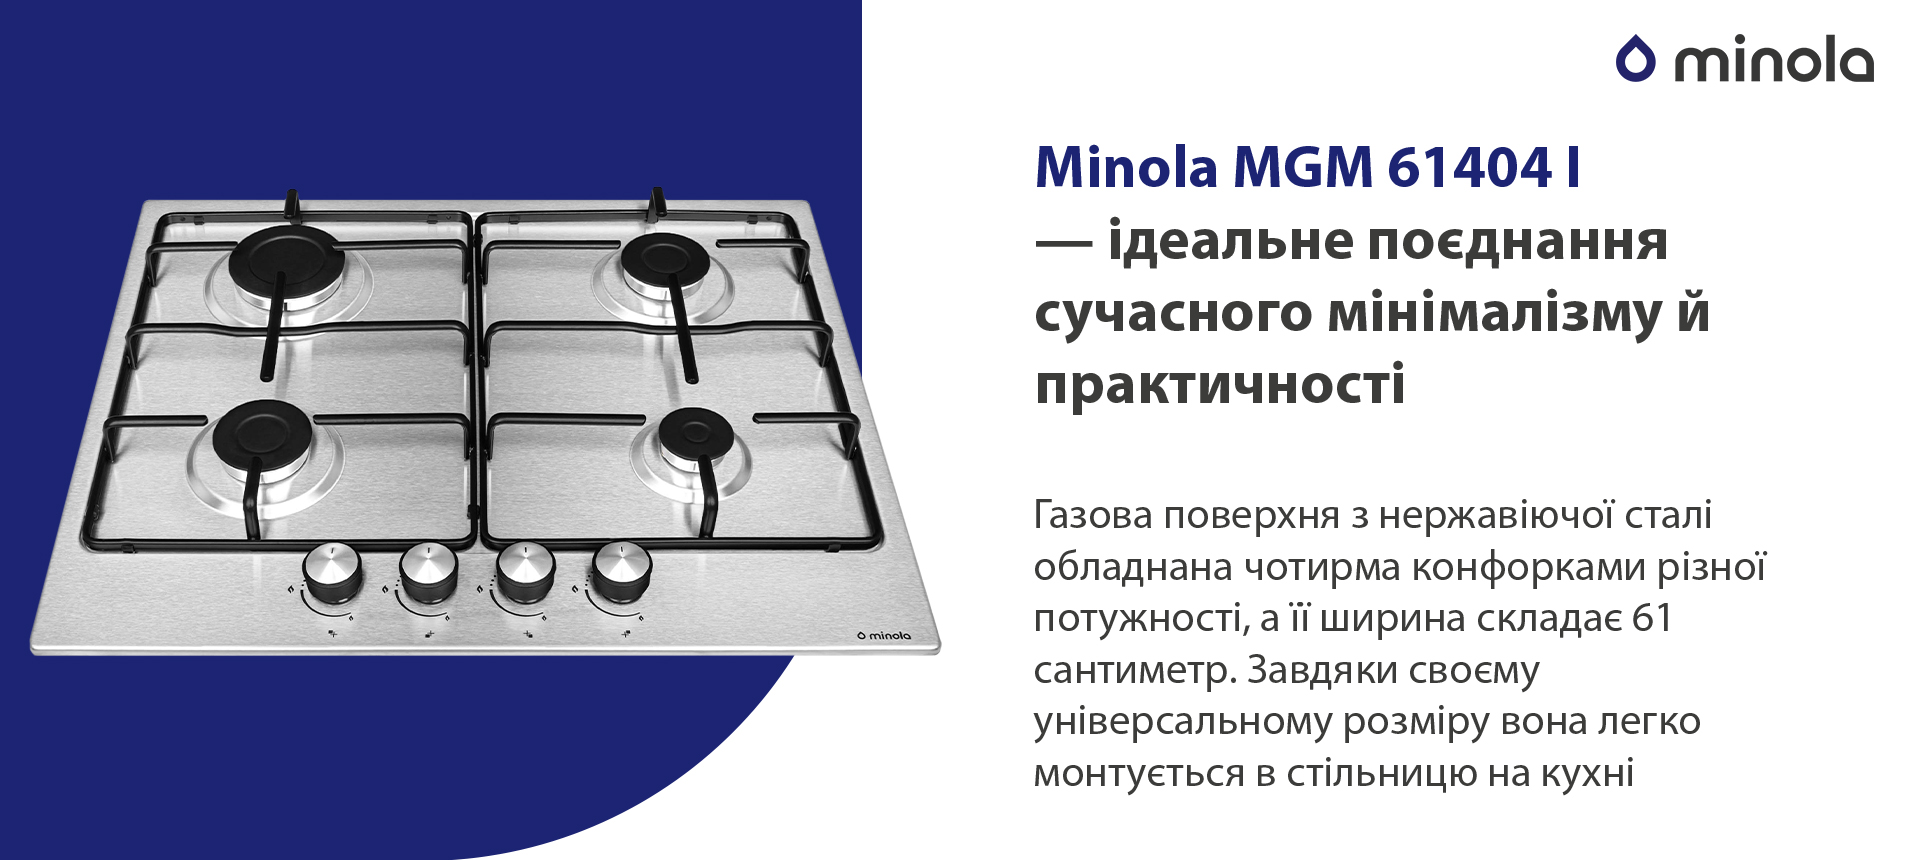 Minola MGM 61404 I в магазине в Киеве - фото 10